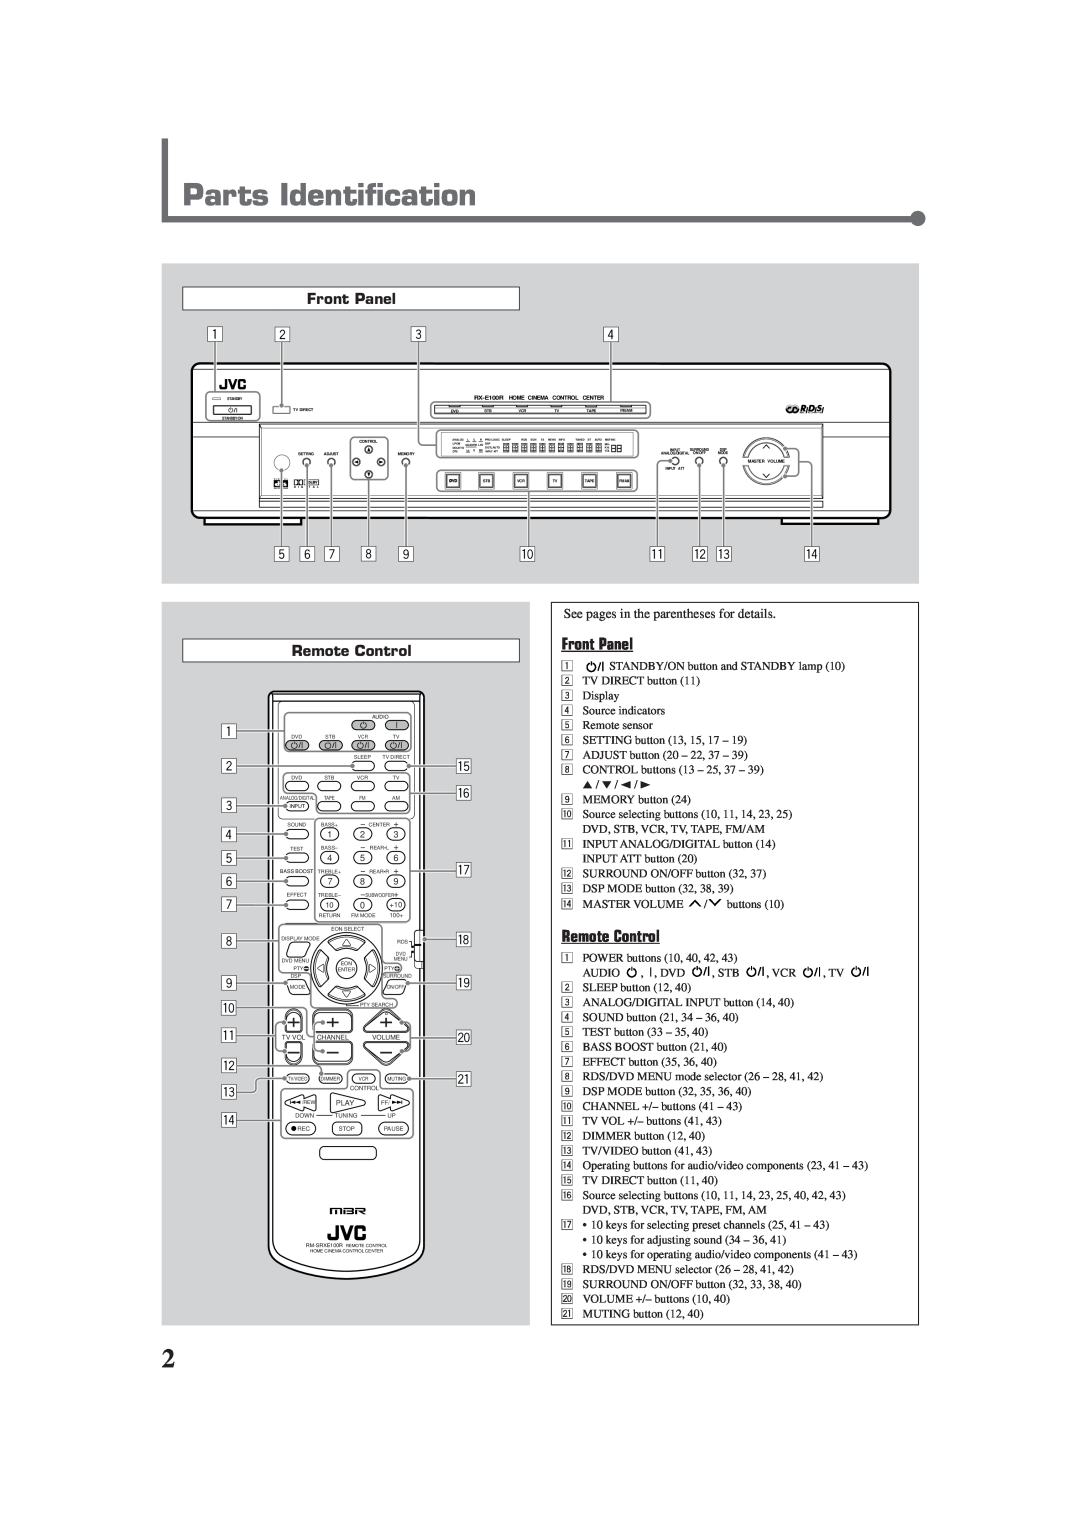 JVC RX-E100RSL manual Parts Identification, Front Panel, Remote Control 